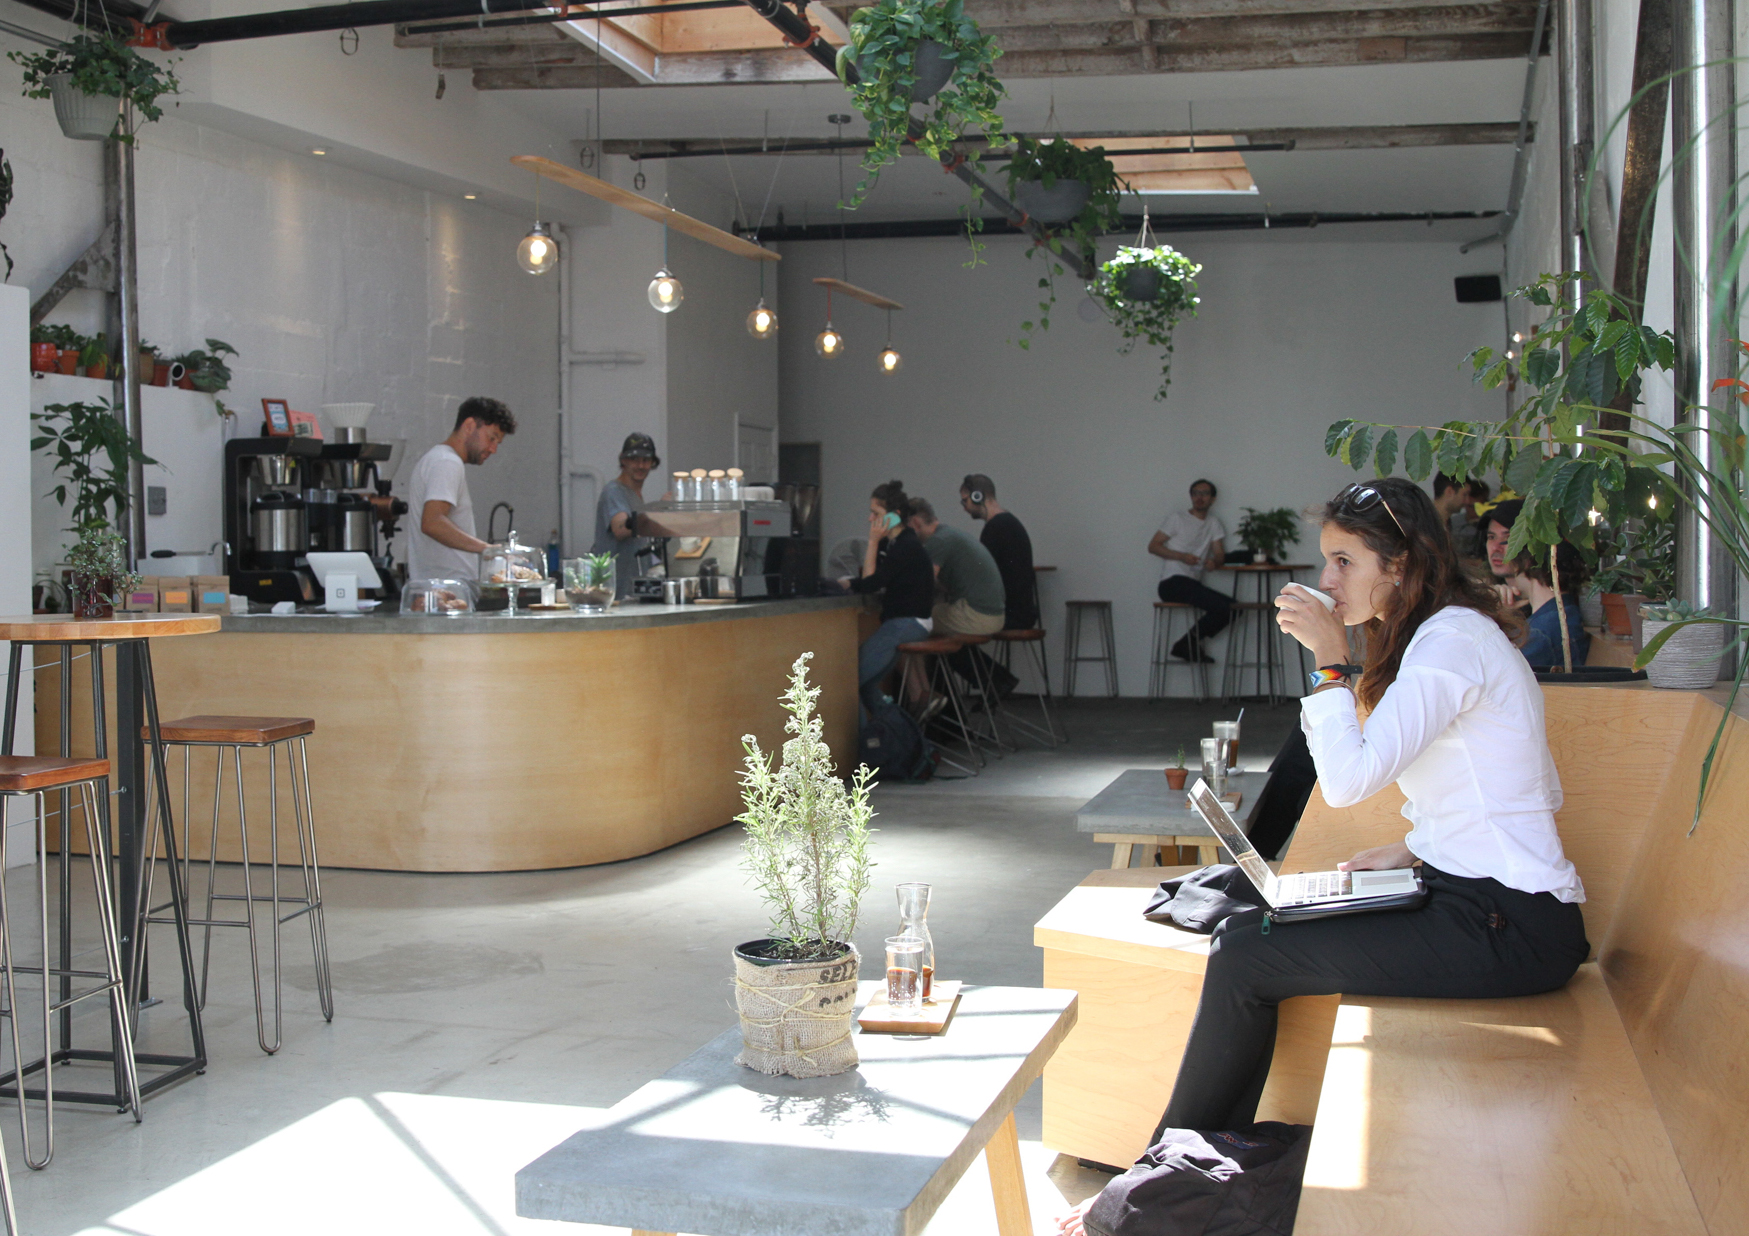 Brooklyn sey coffee shop from the inside